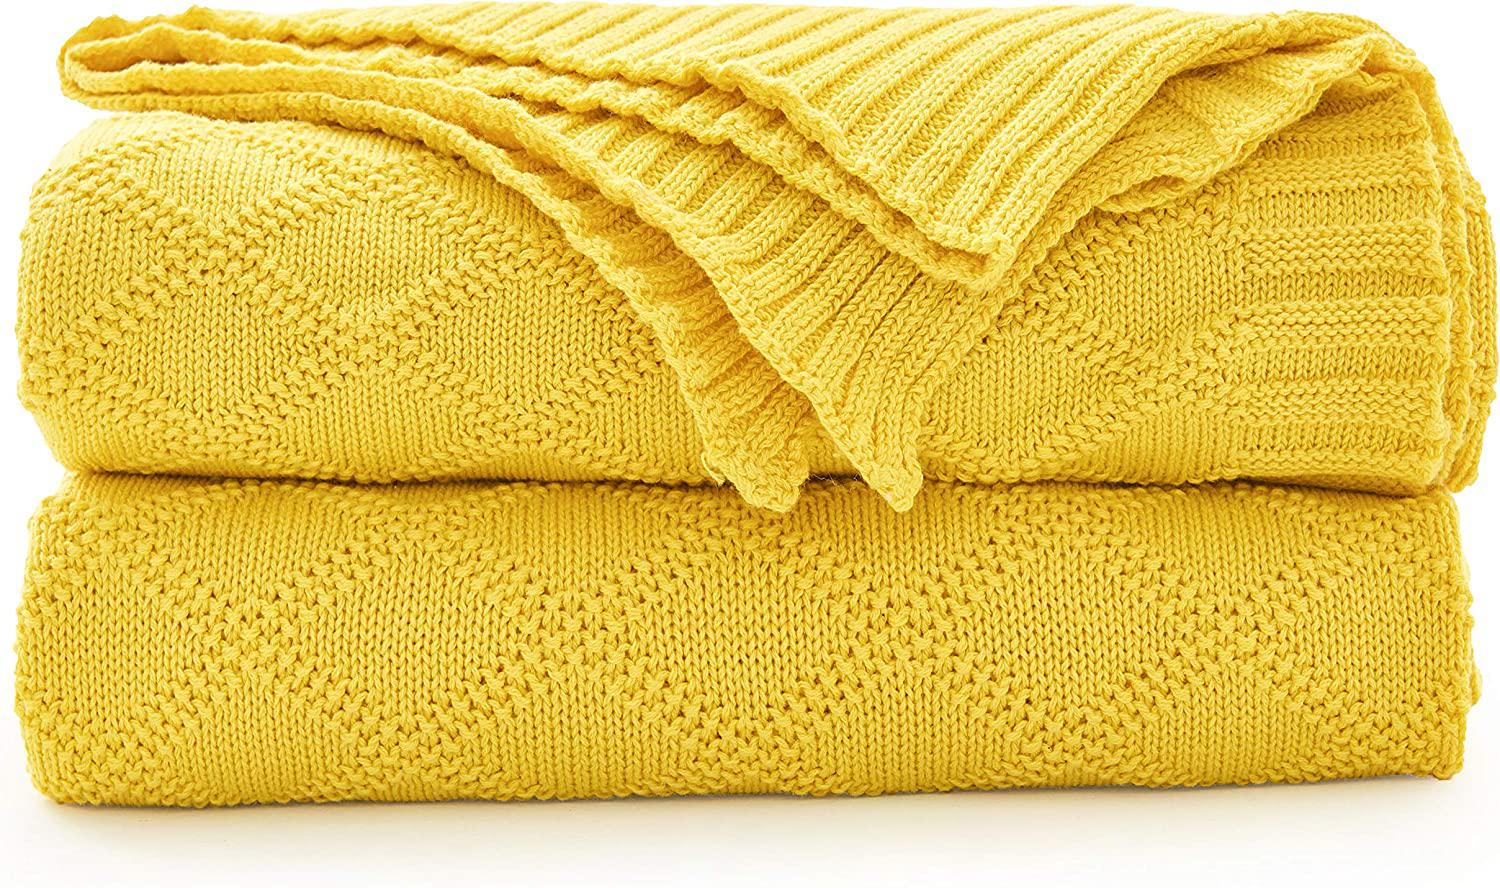 Soft Yellow Baby Blanket